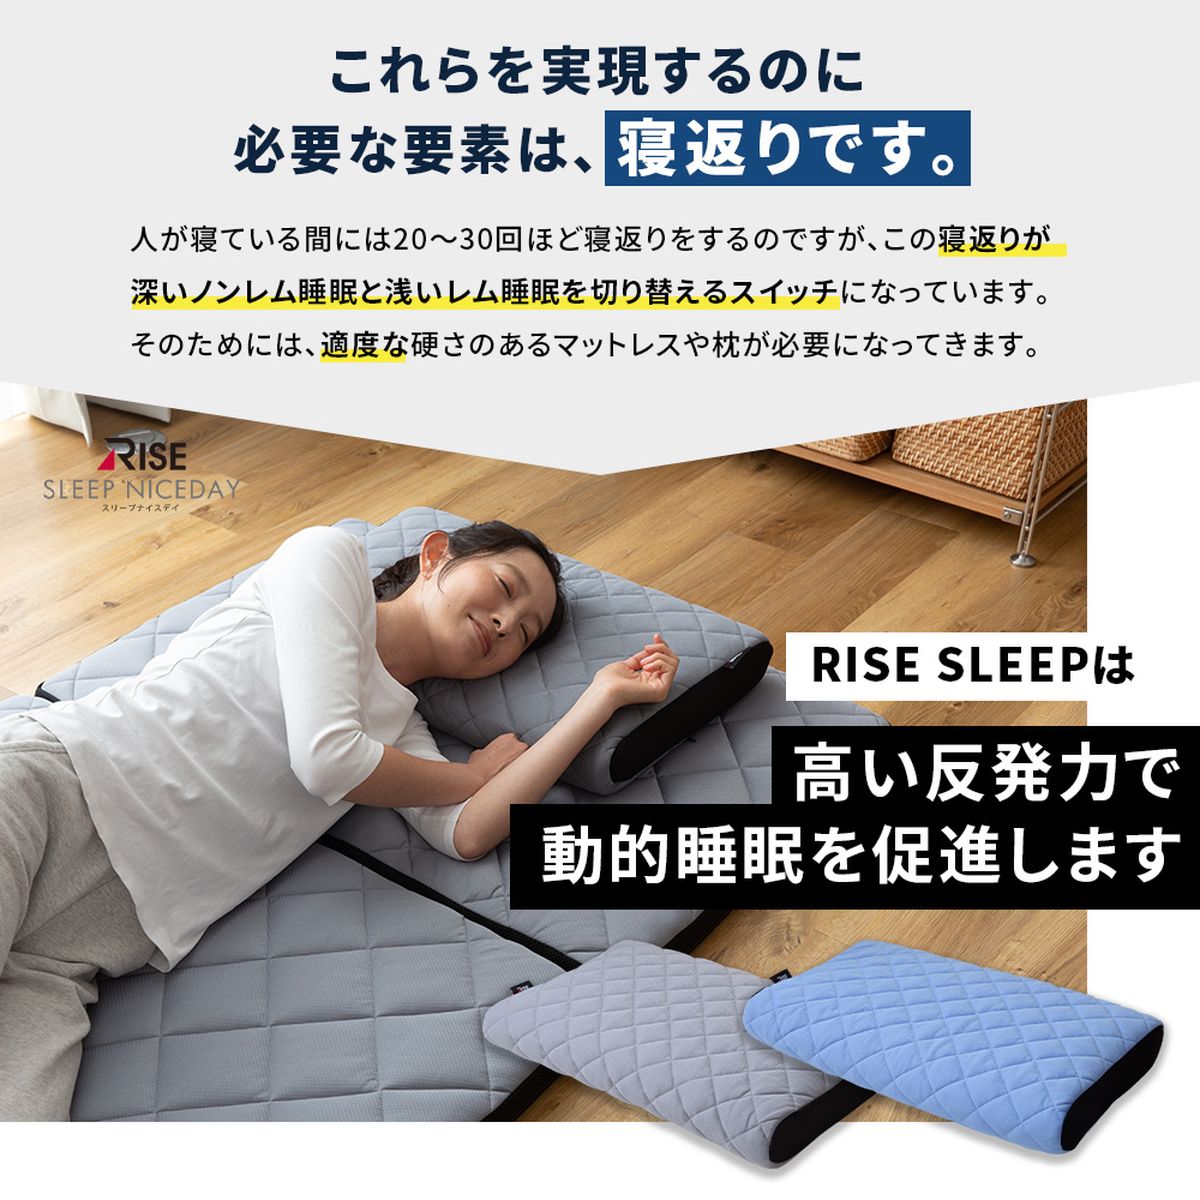 RISE Sleep Niceday 桑田真澄式 動的睡眠 高さ調整高反発ピロー 35×60cm グレー